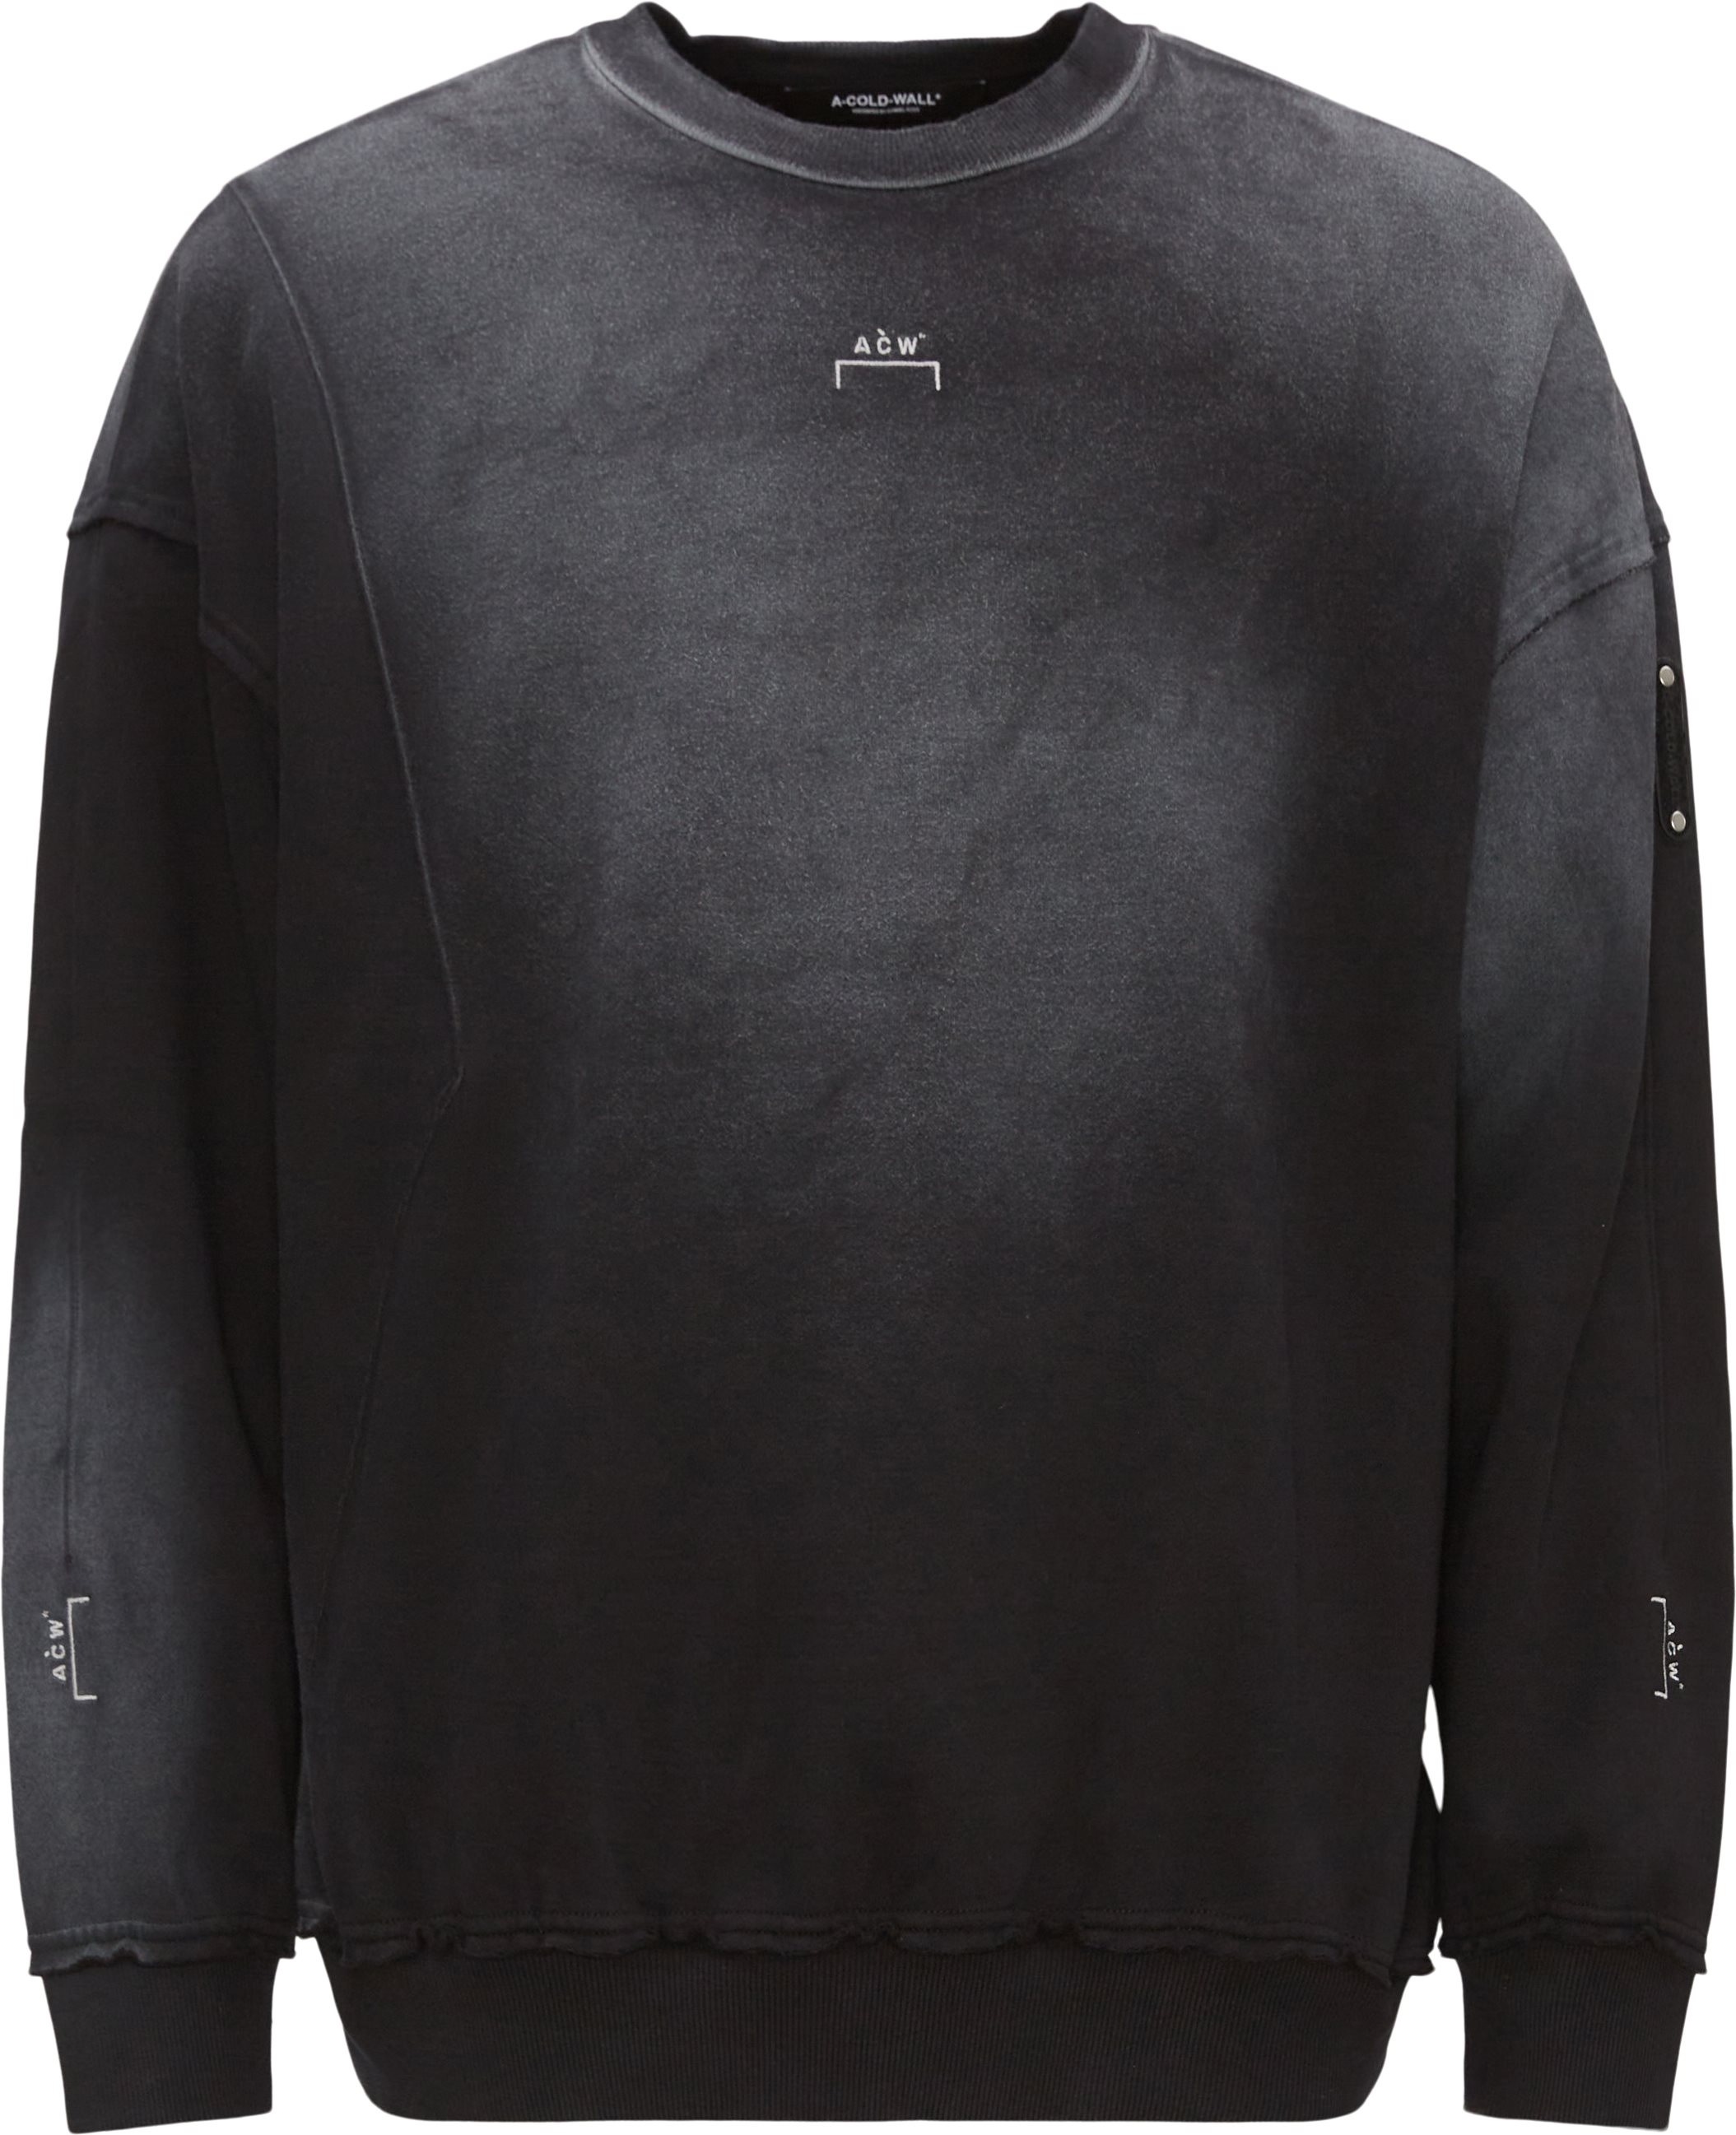 A-COLD-WALL* Sweatshirts ACWMW141 SHIRAGA CREWNECK Black